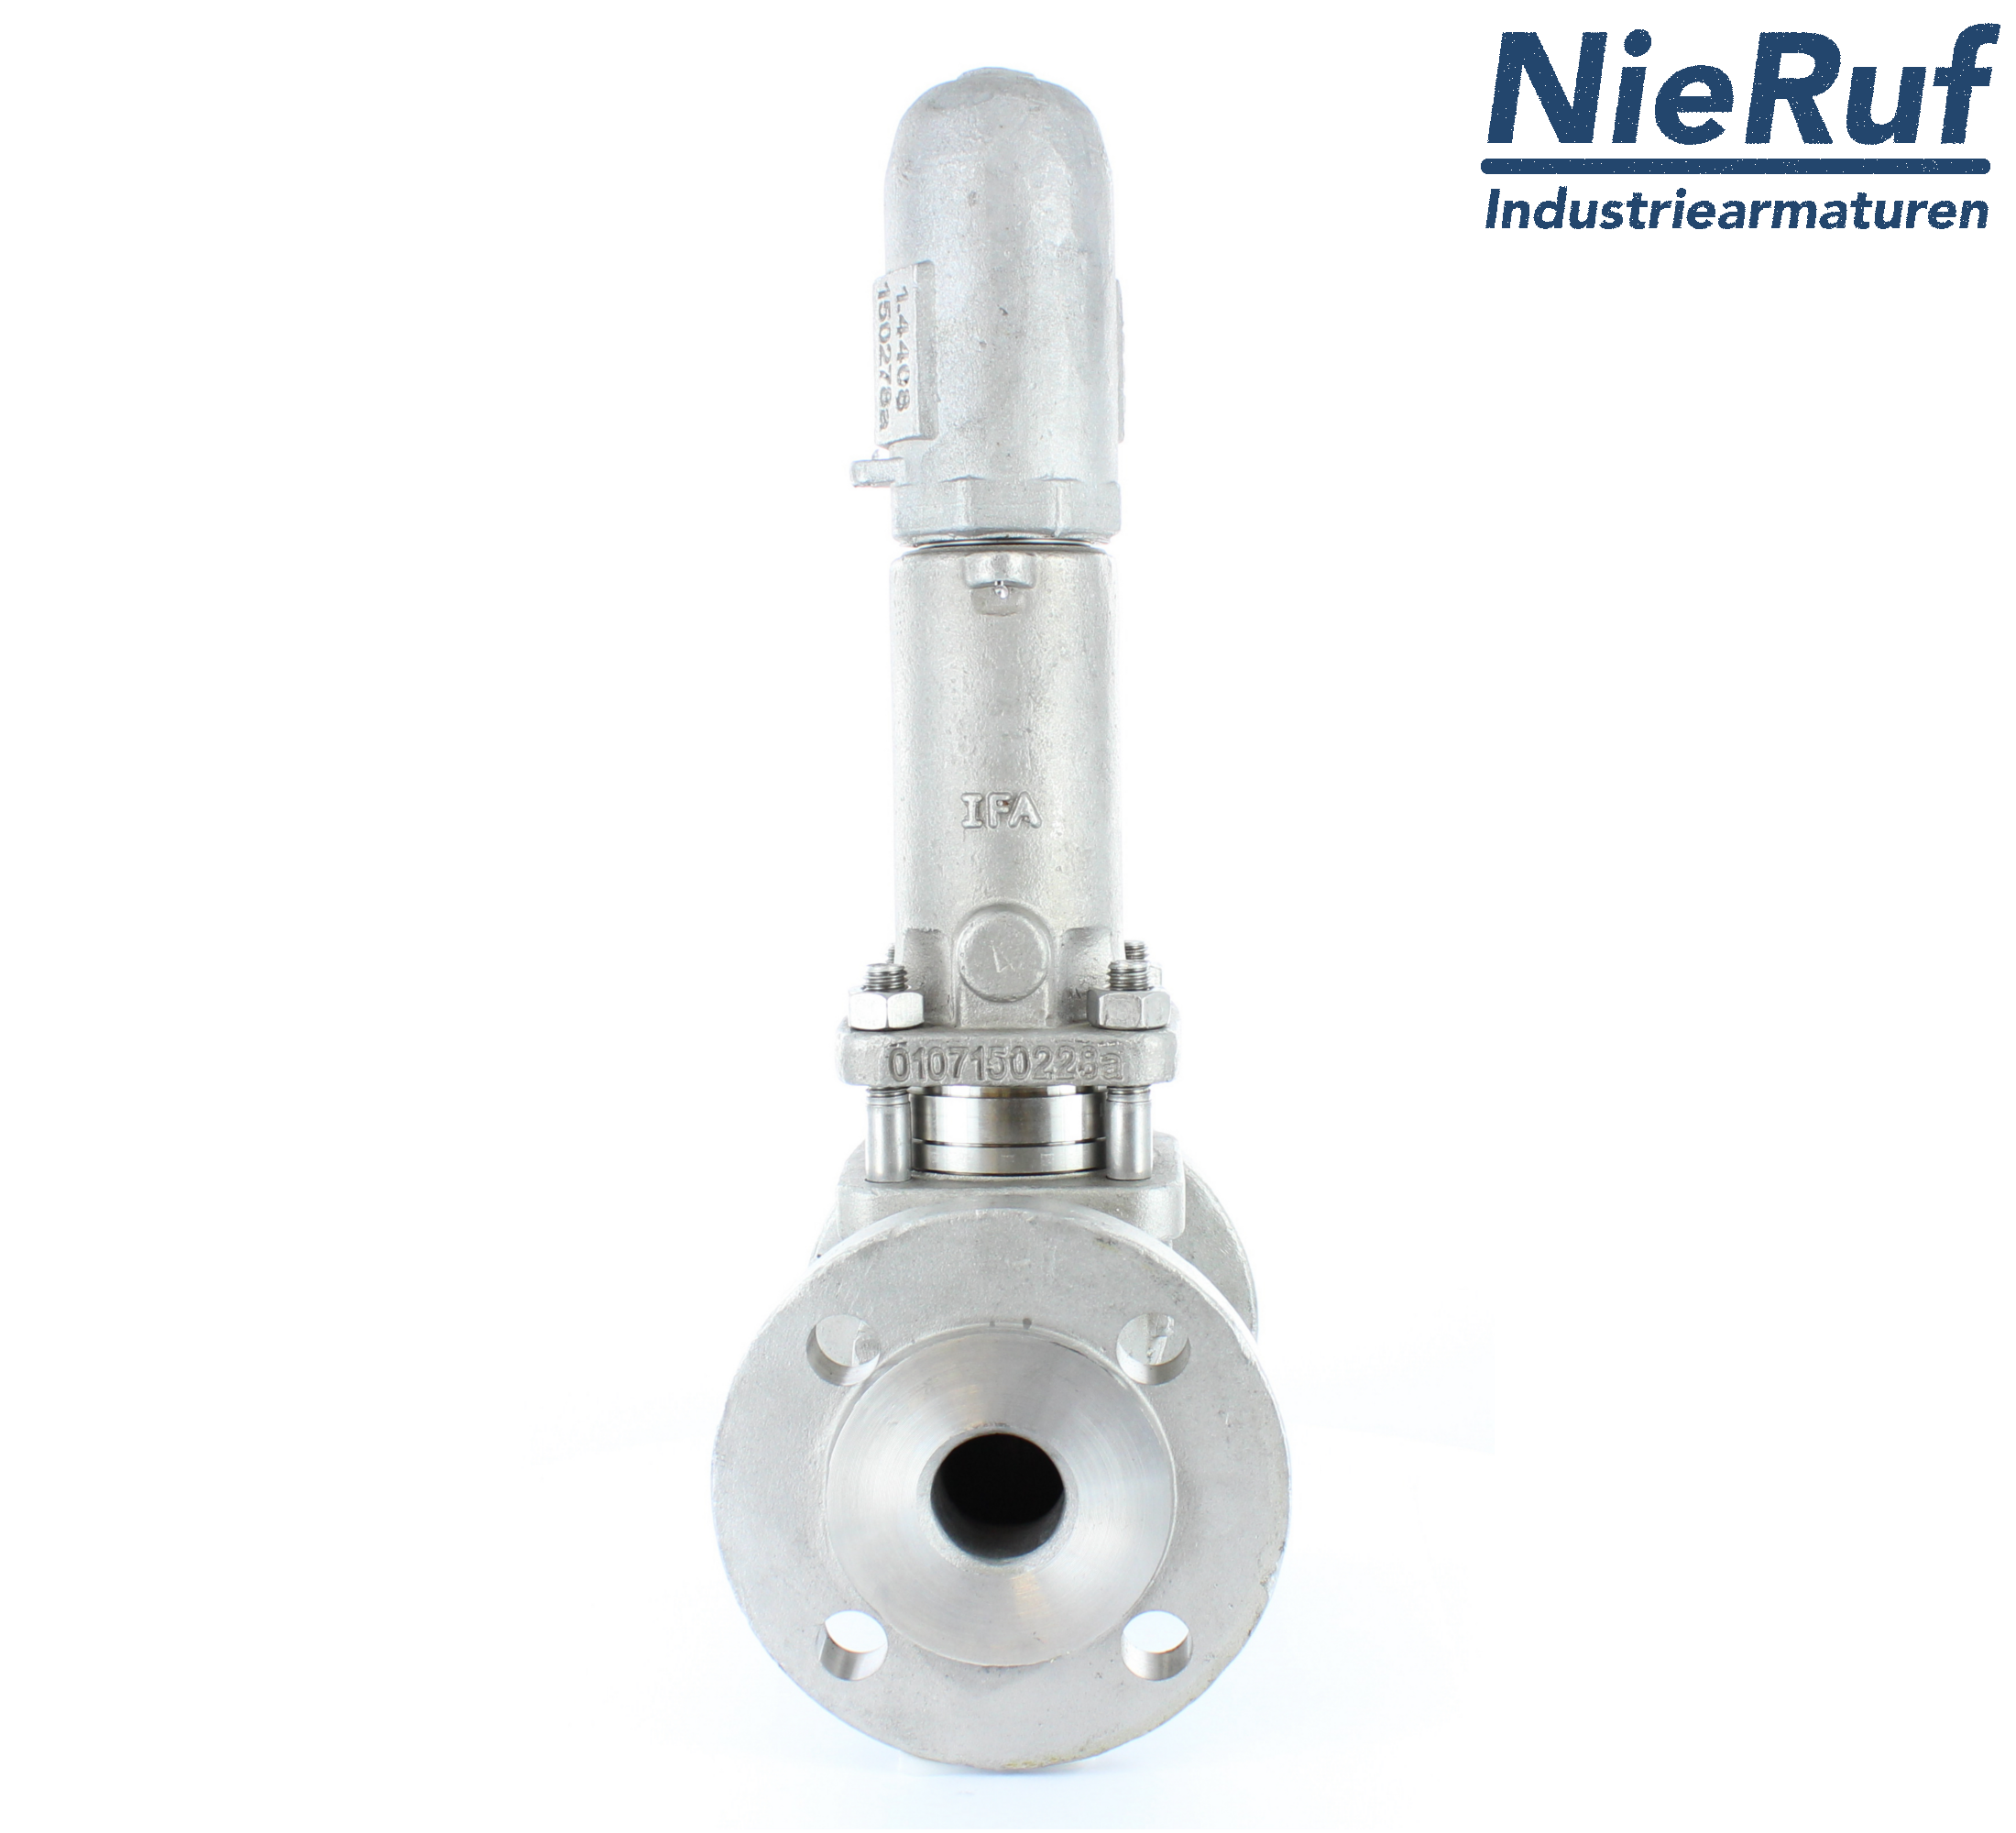 piston overflow valve DN 20 UV13 stainless steel AISI 316L 4,0 - 10,0 bar